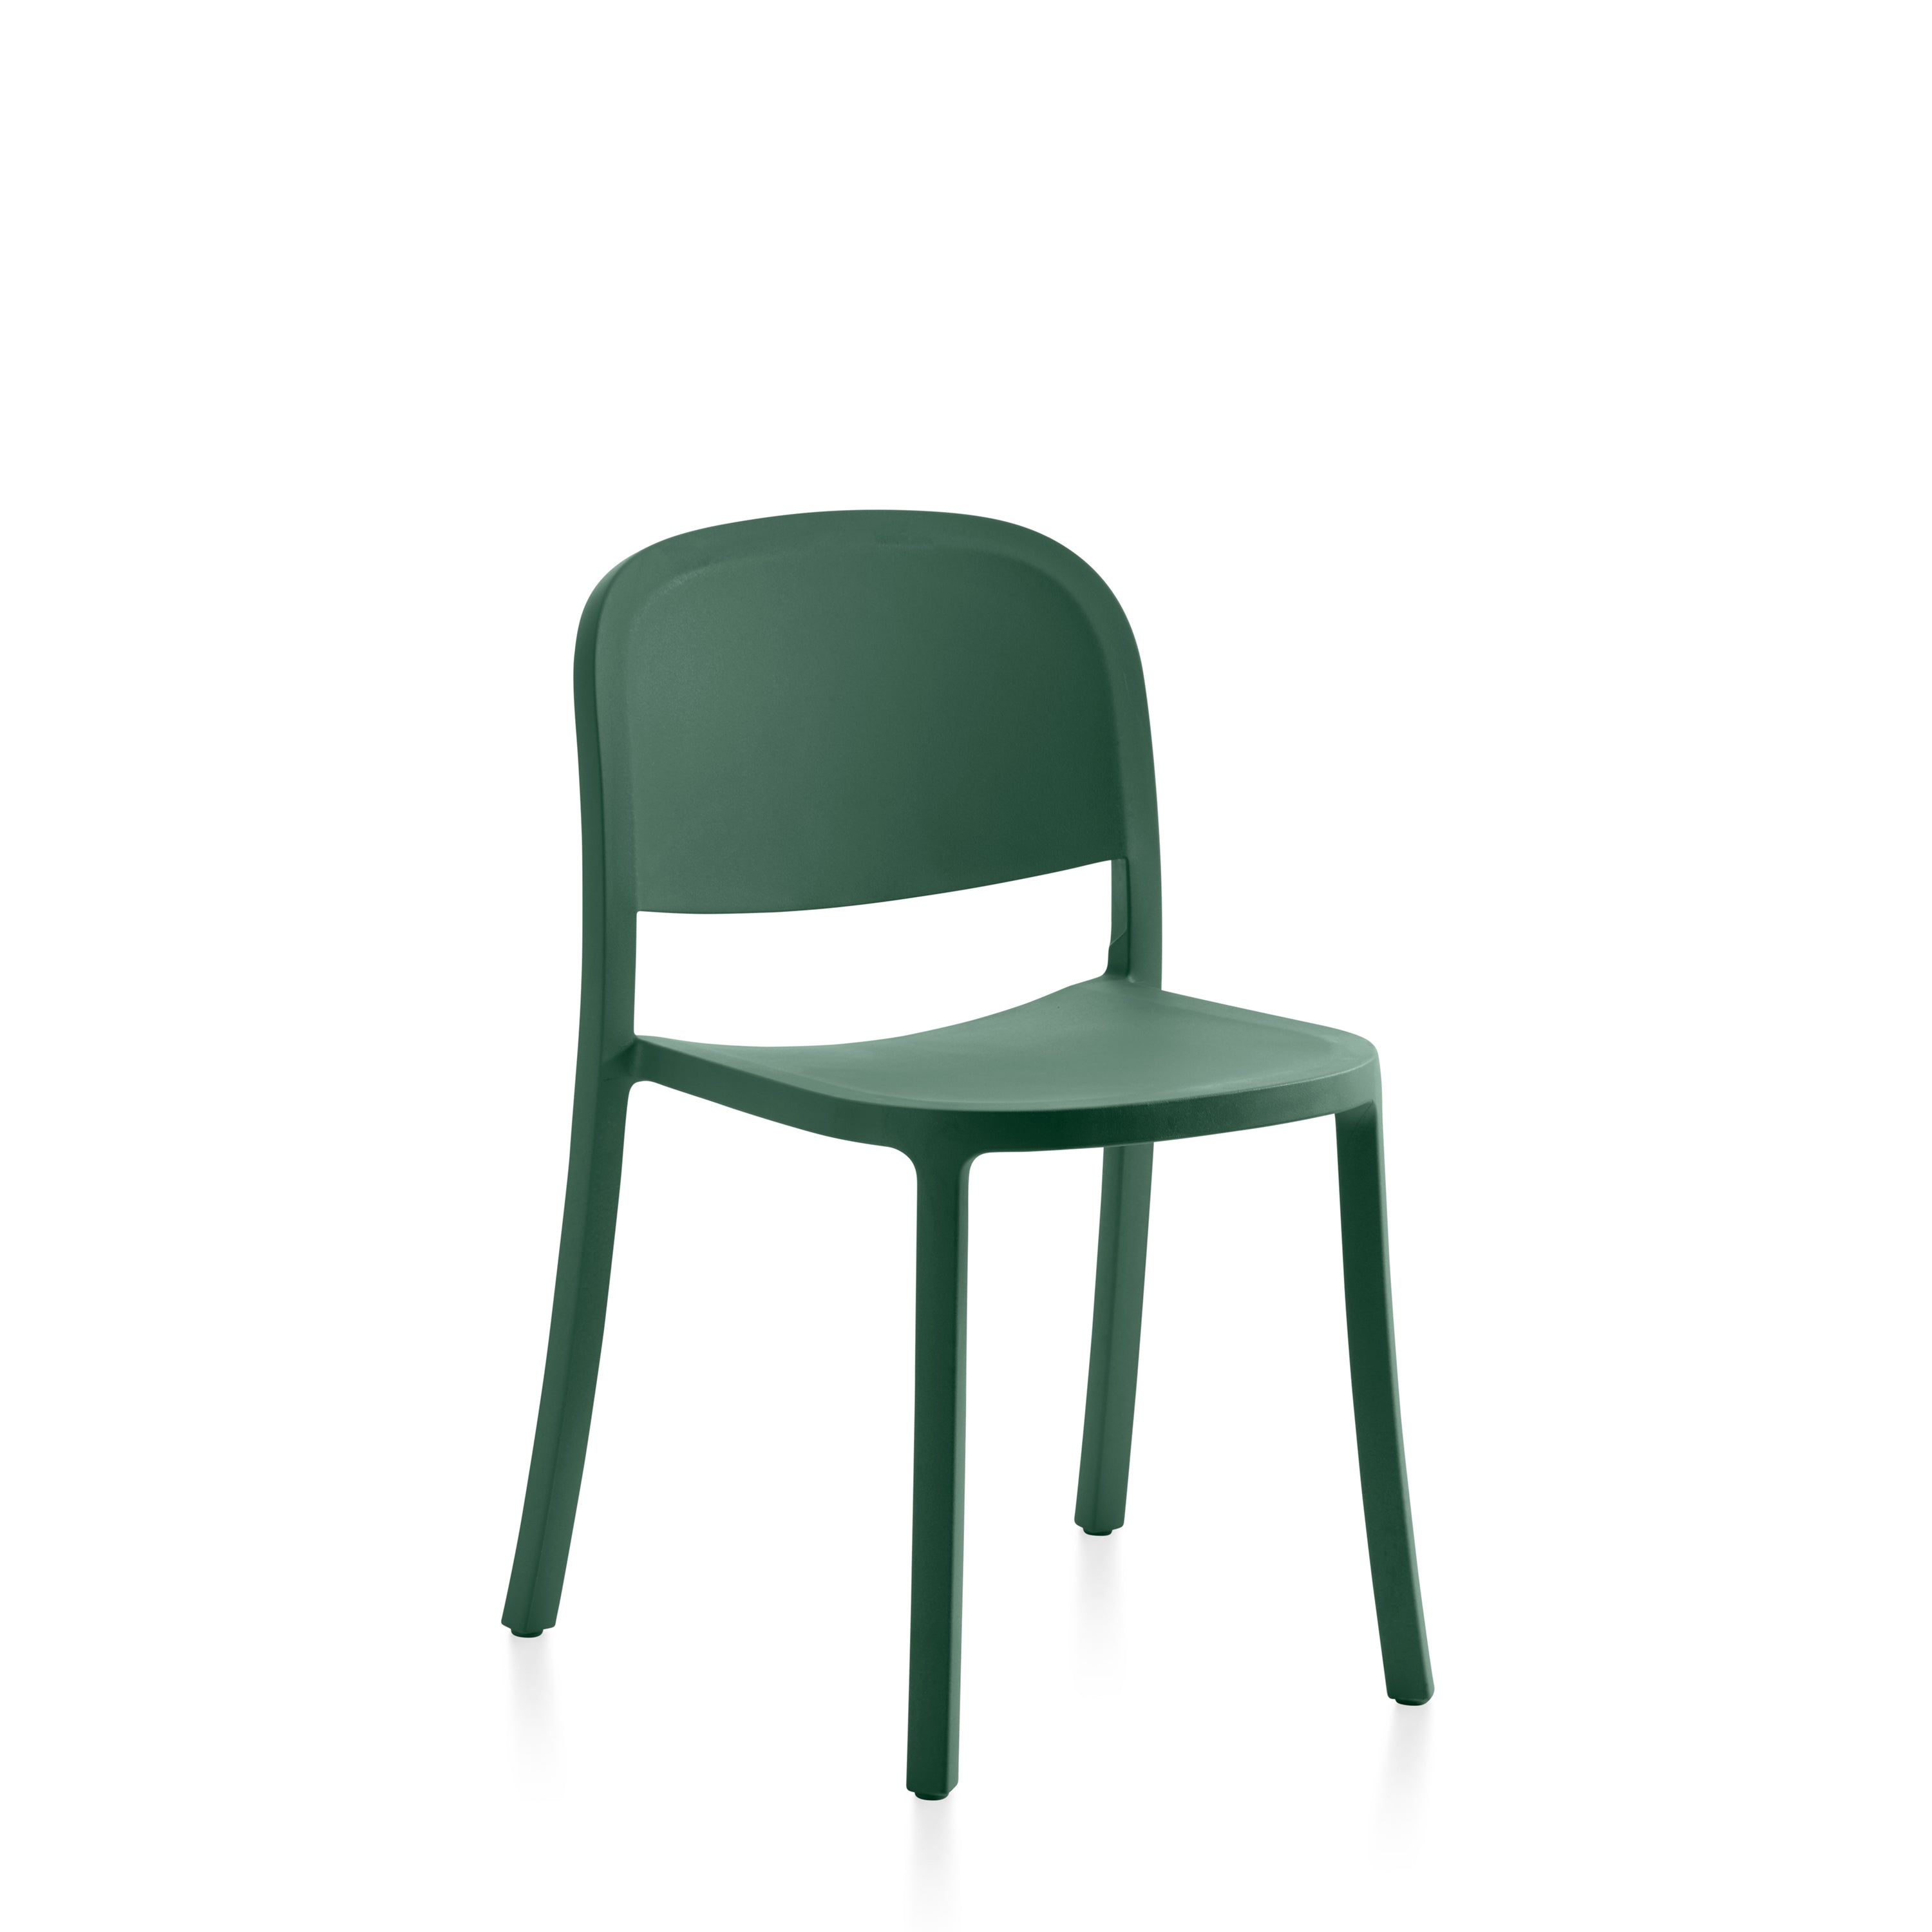 1" Reclaimed Chair